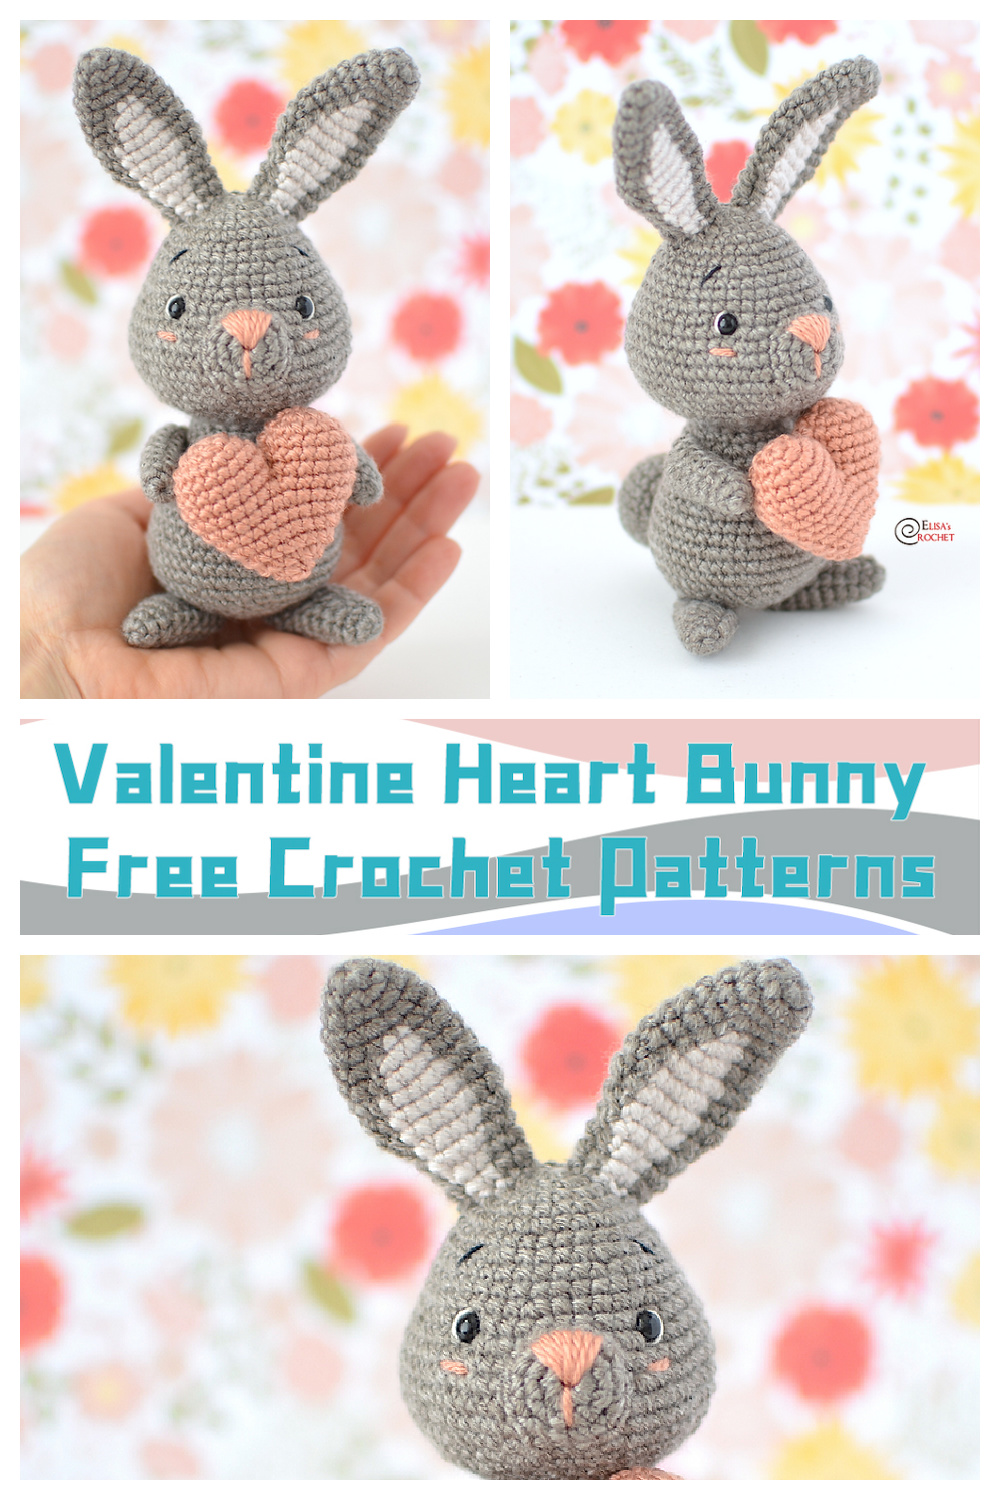 Valentine Heart Bunny Free Crochet Patterns 